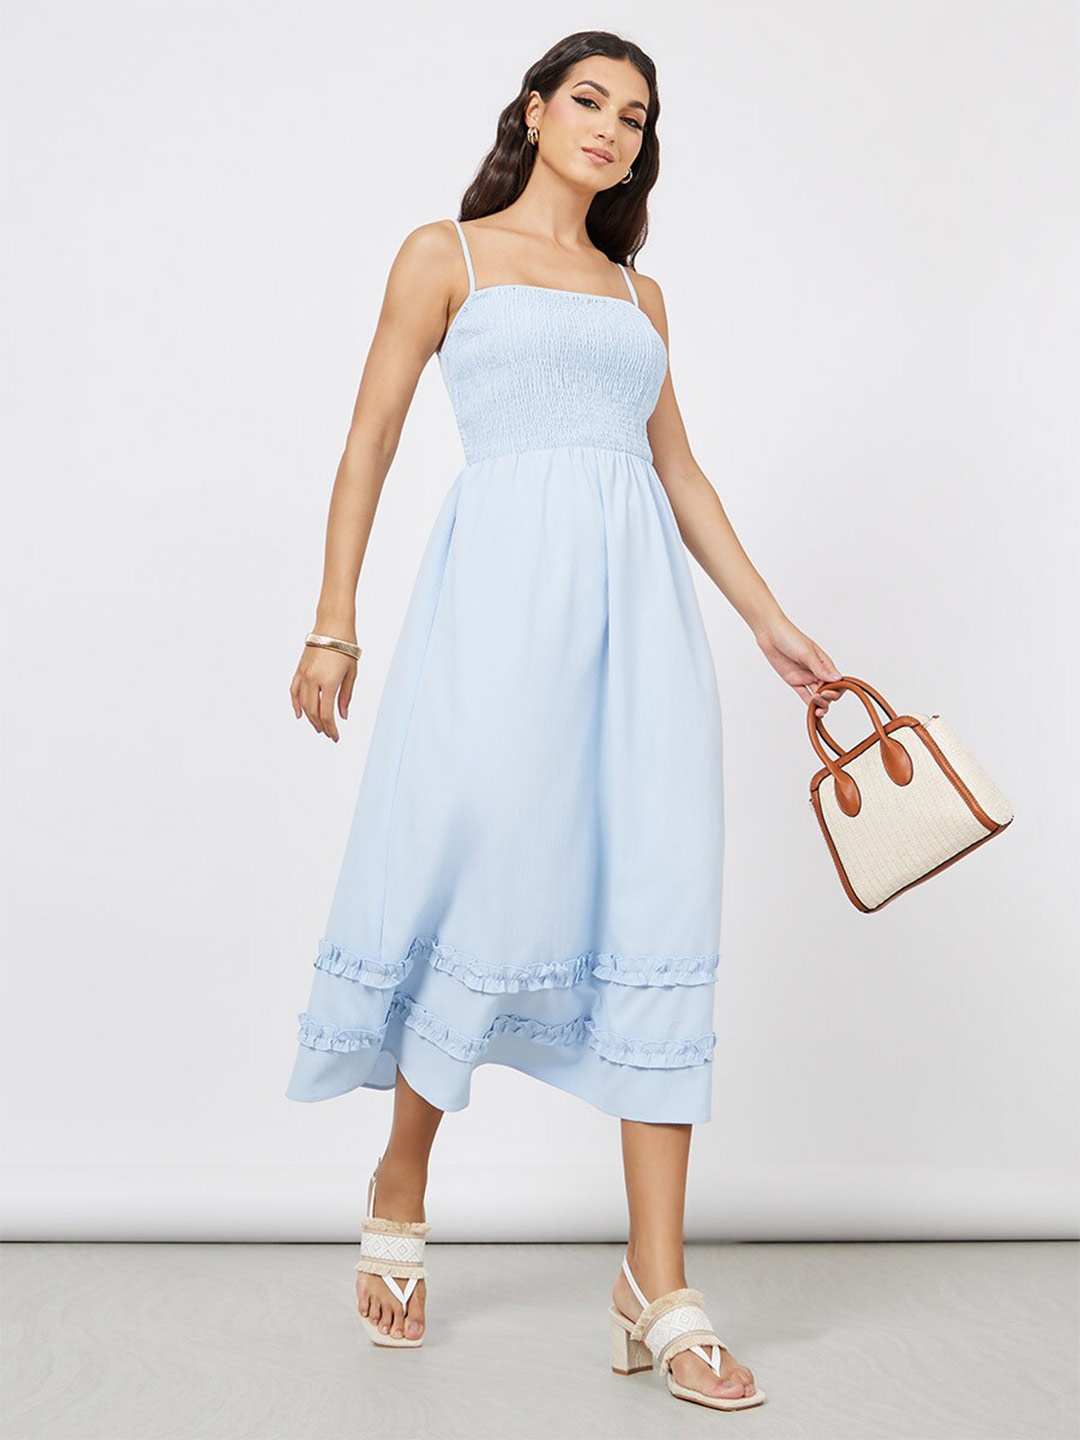 H&M Lace-detail Satin Slip Dress